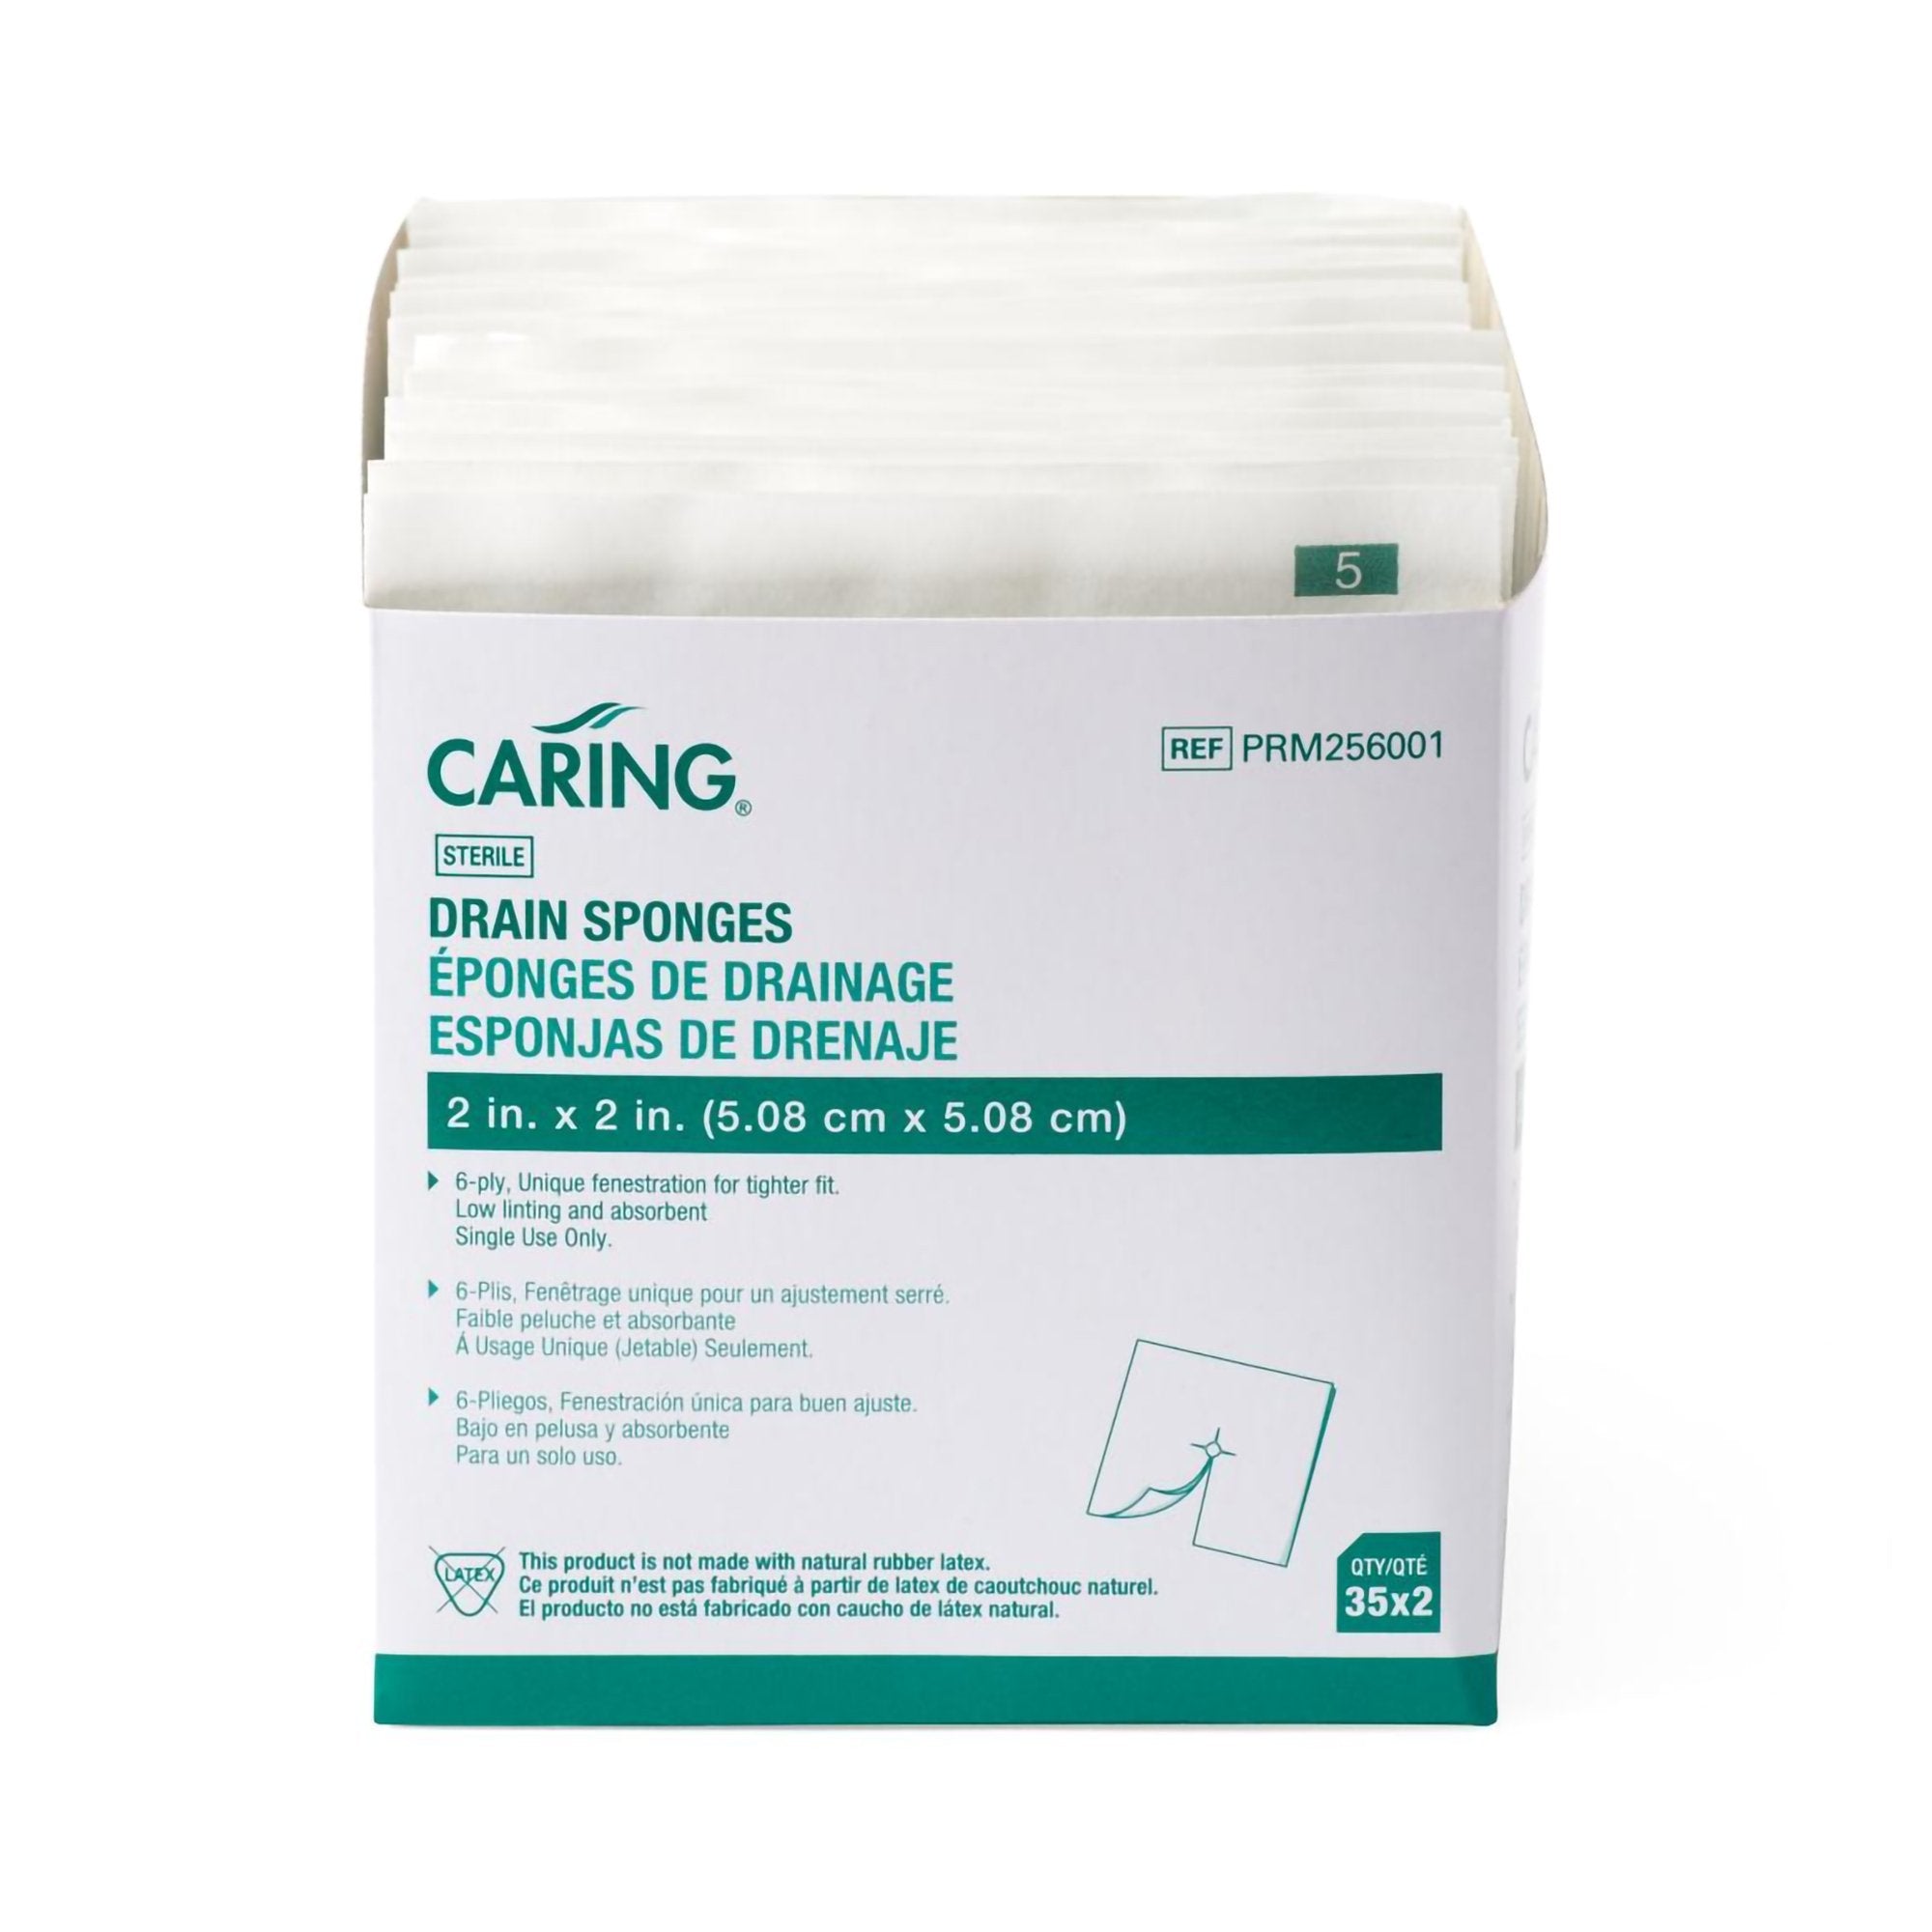 Drain Sponge Caring® 2 X 2 Inch Sterile 6-Ply